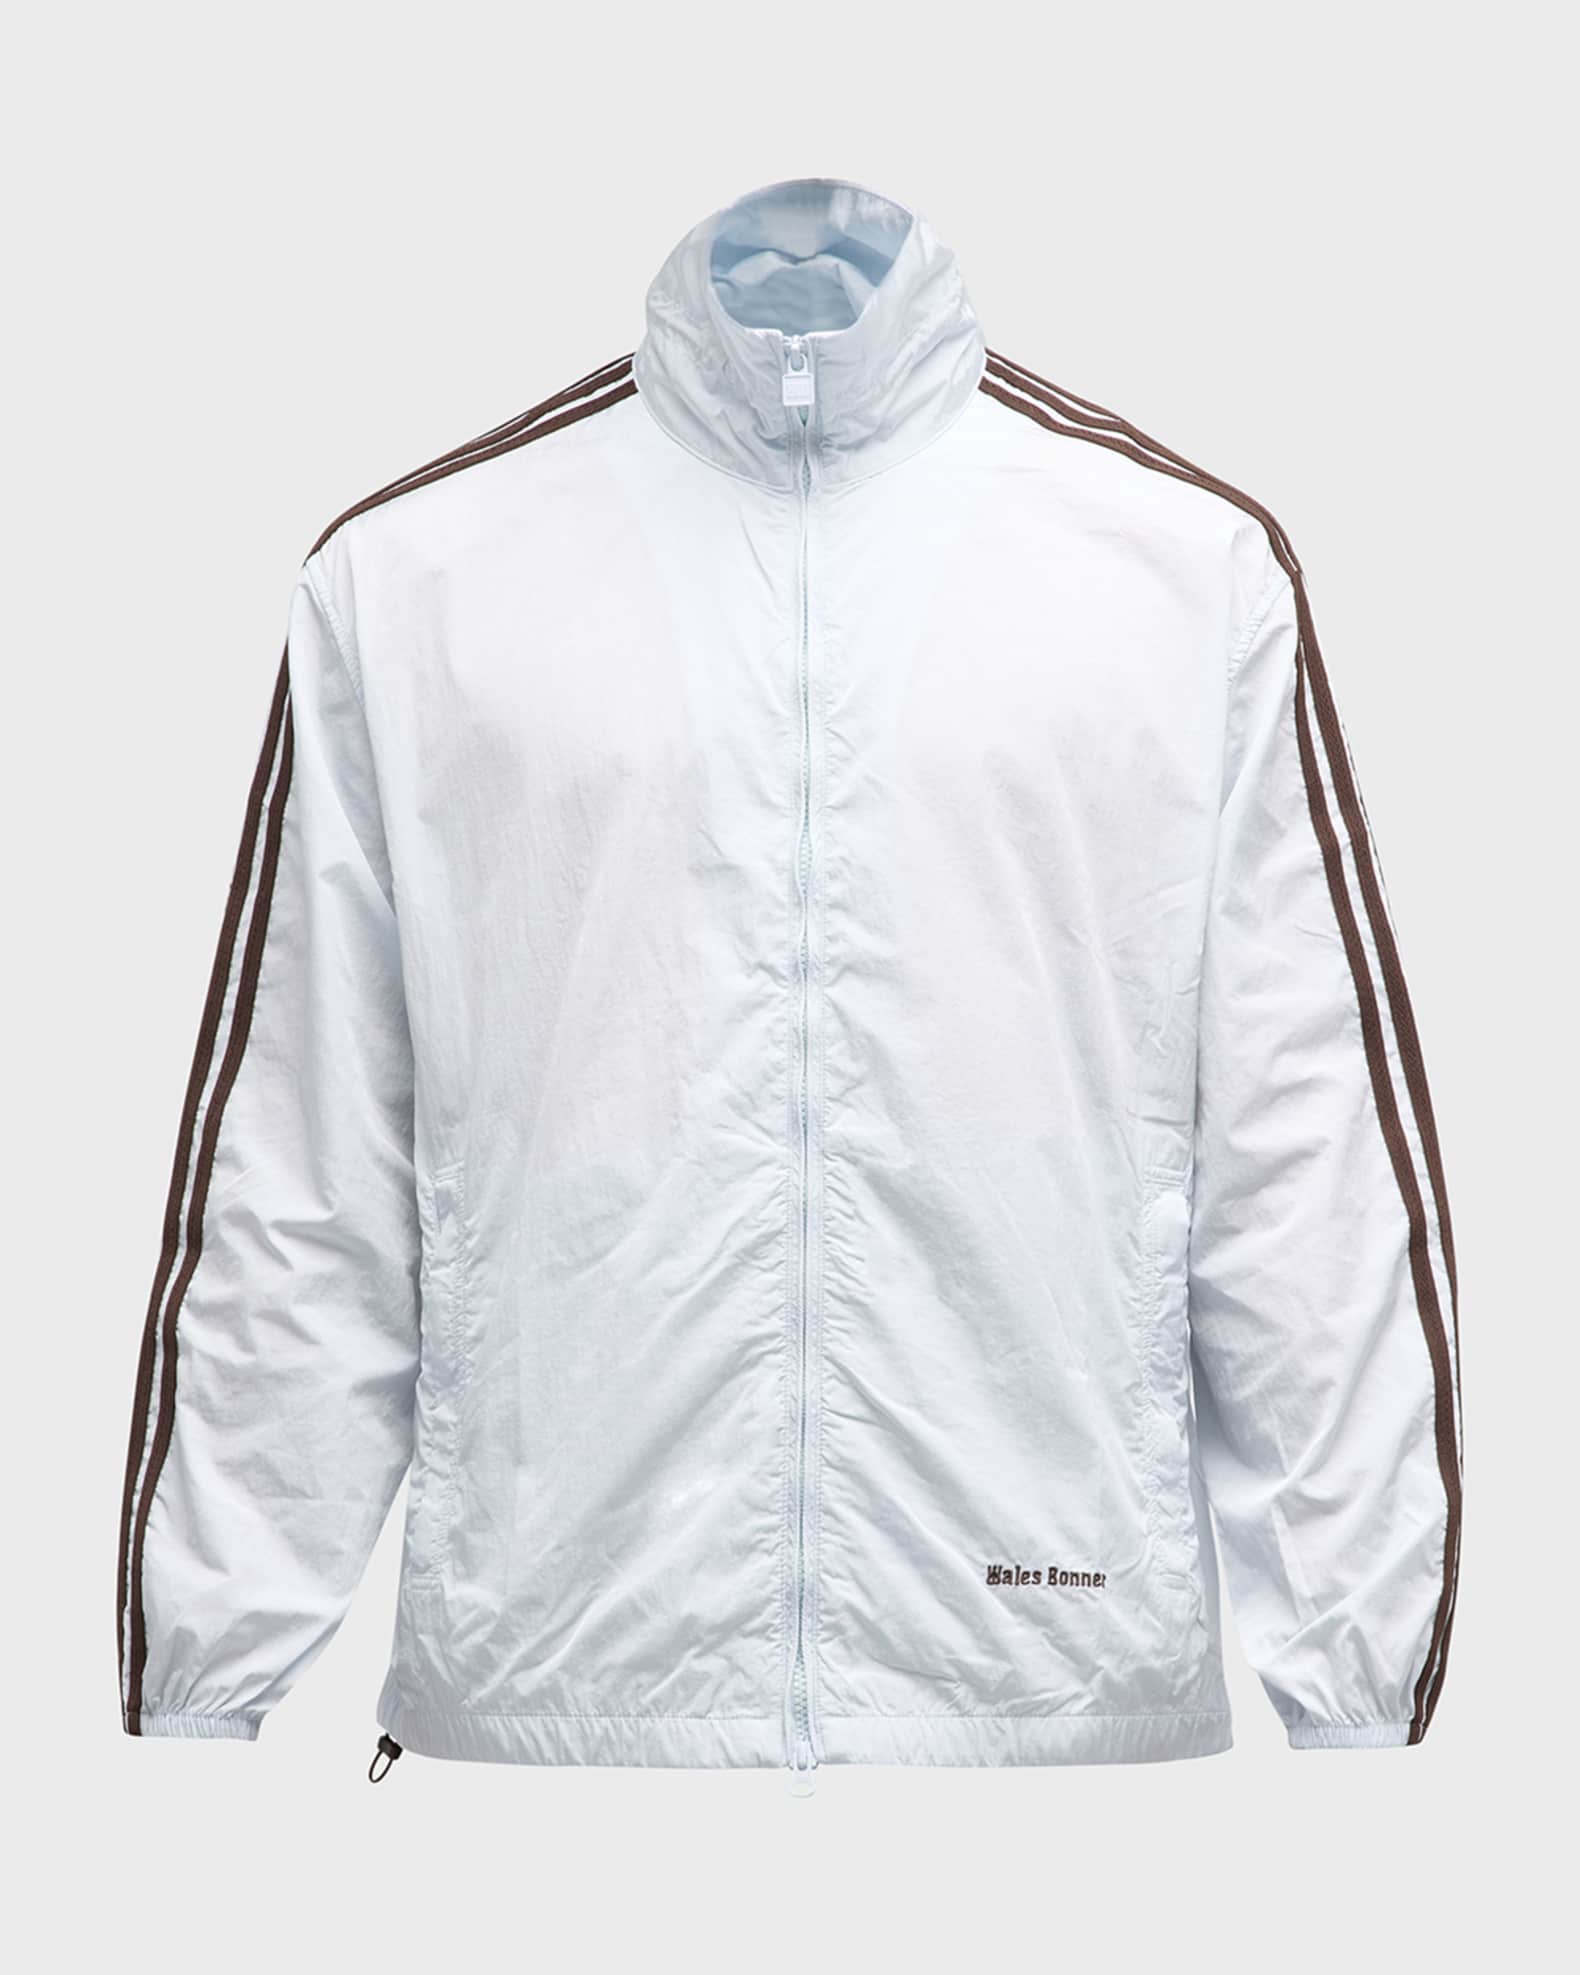 Adidas x Wales Bonner Men's Logo Stripe Track Jacket | Neiman Marcus